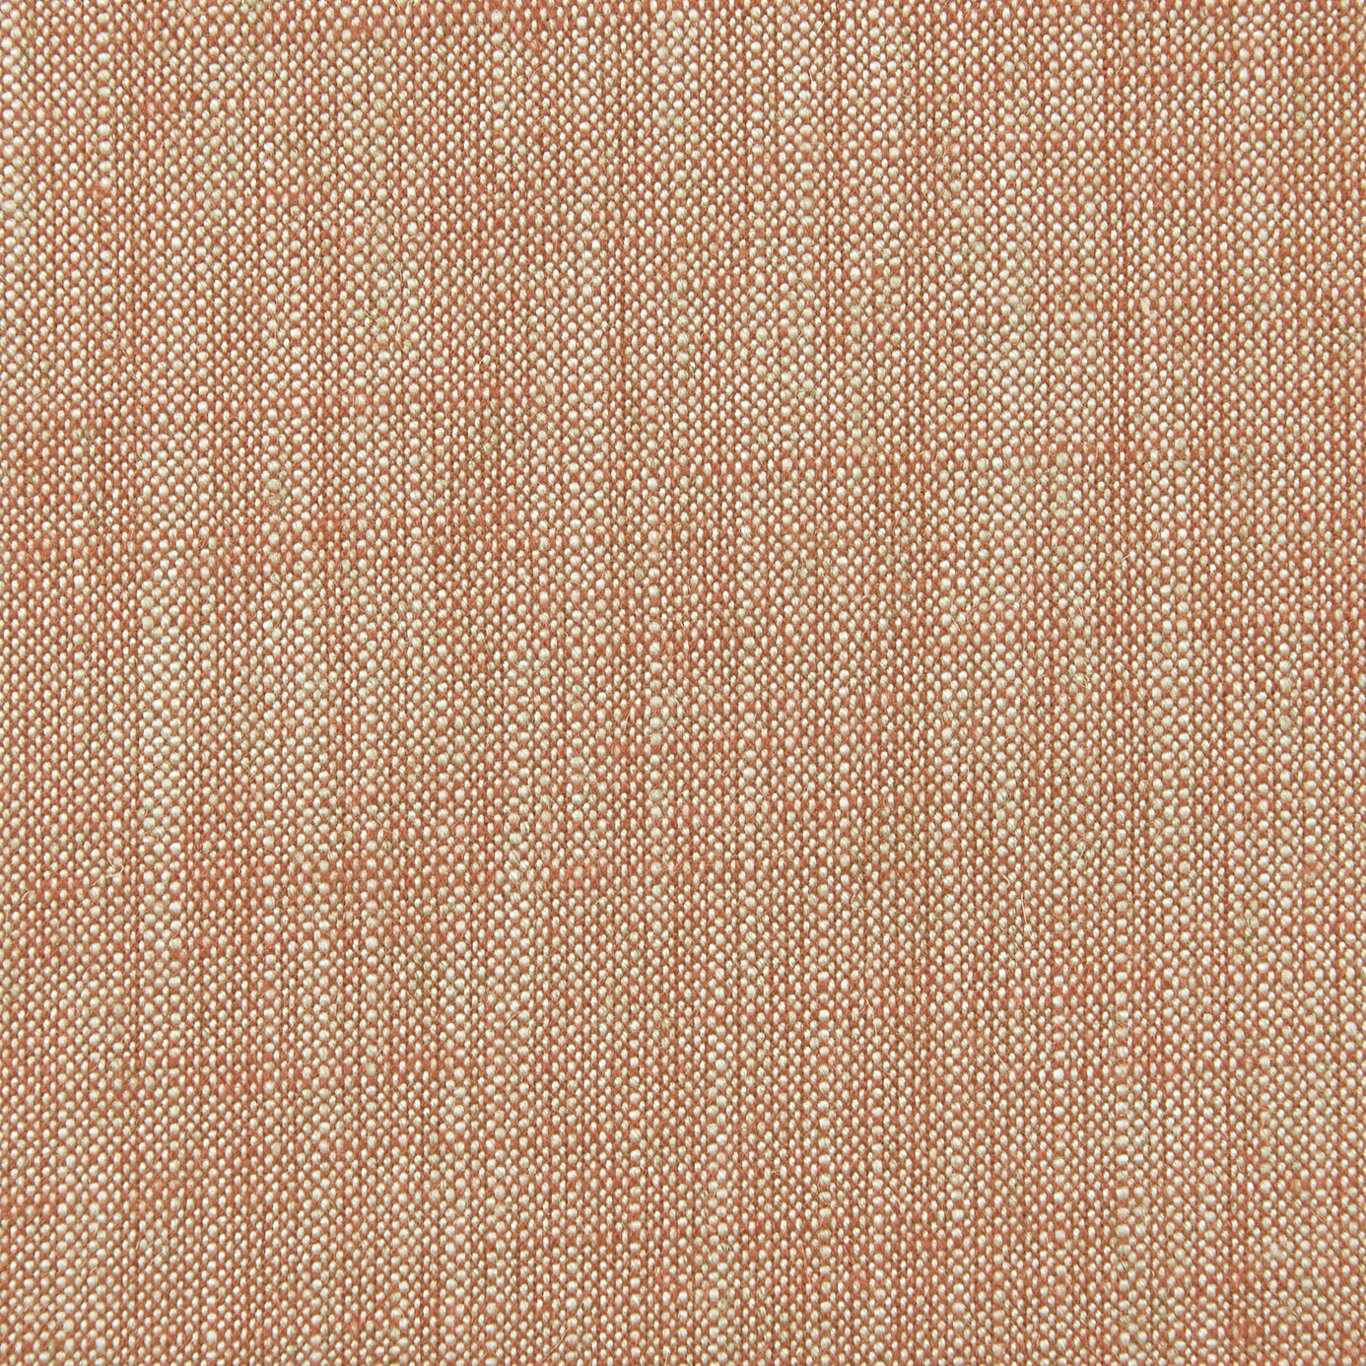 Biarritz Fabric by Clarke & Clarke - F0965/10 - Cinnamon